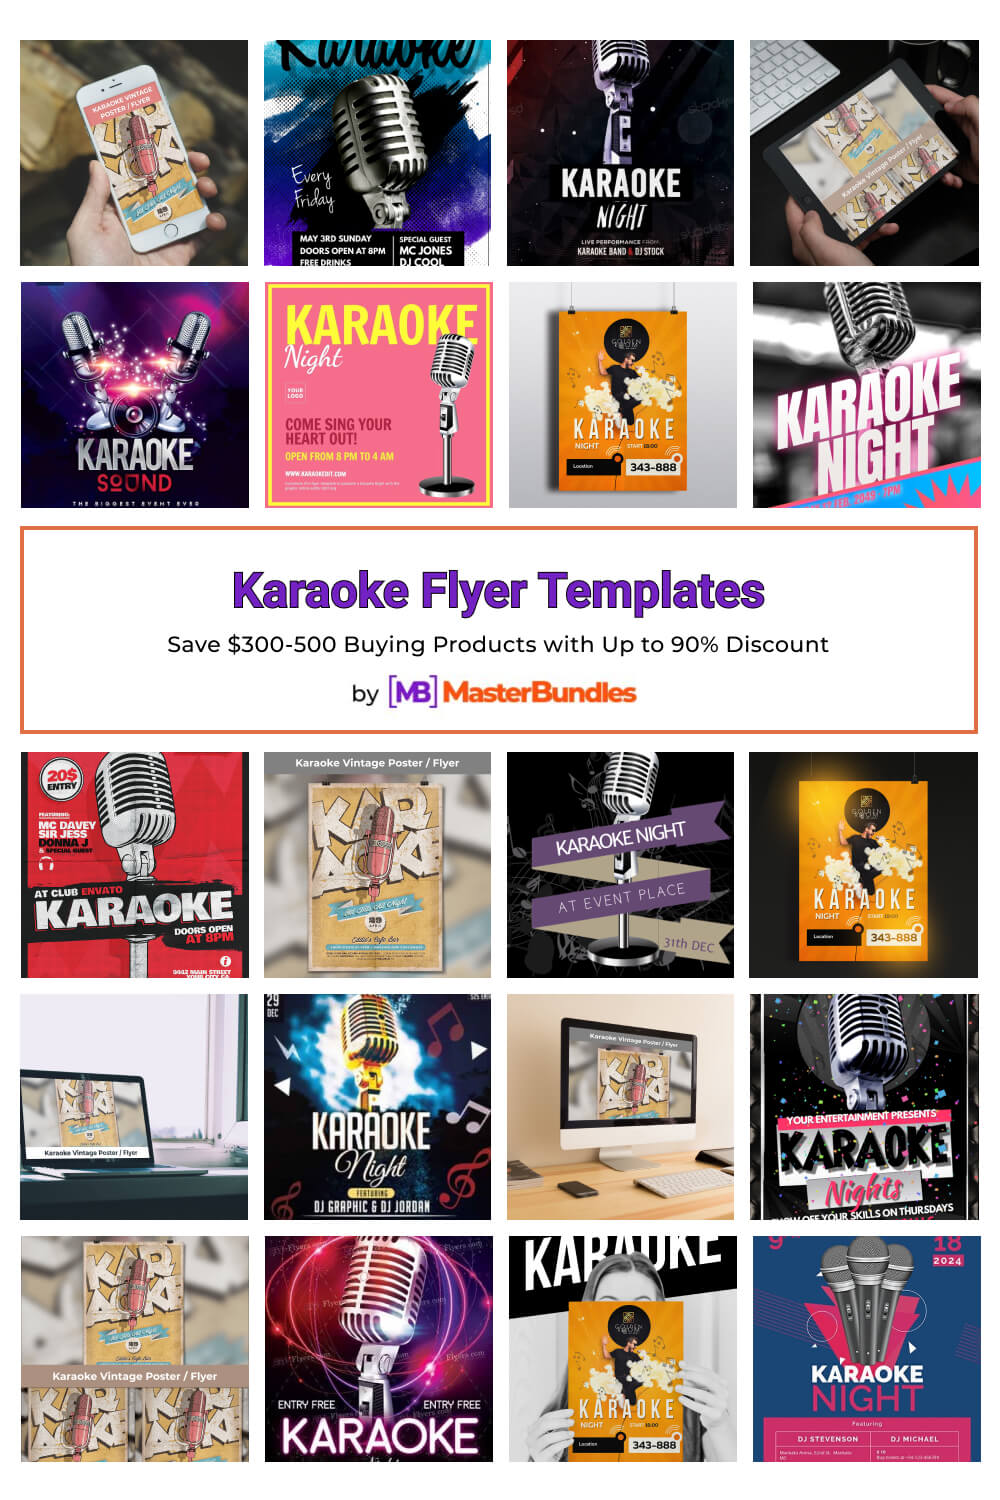 karaoke flyer templates pinterest image.